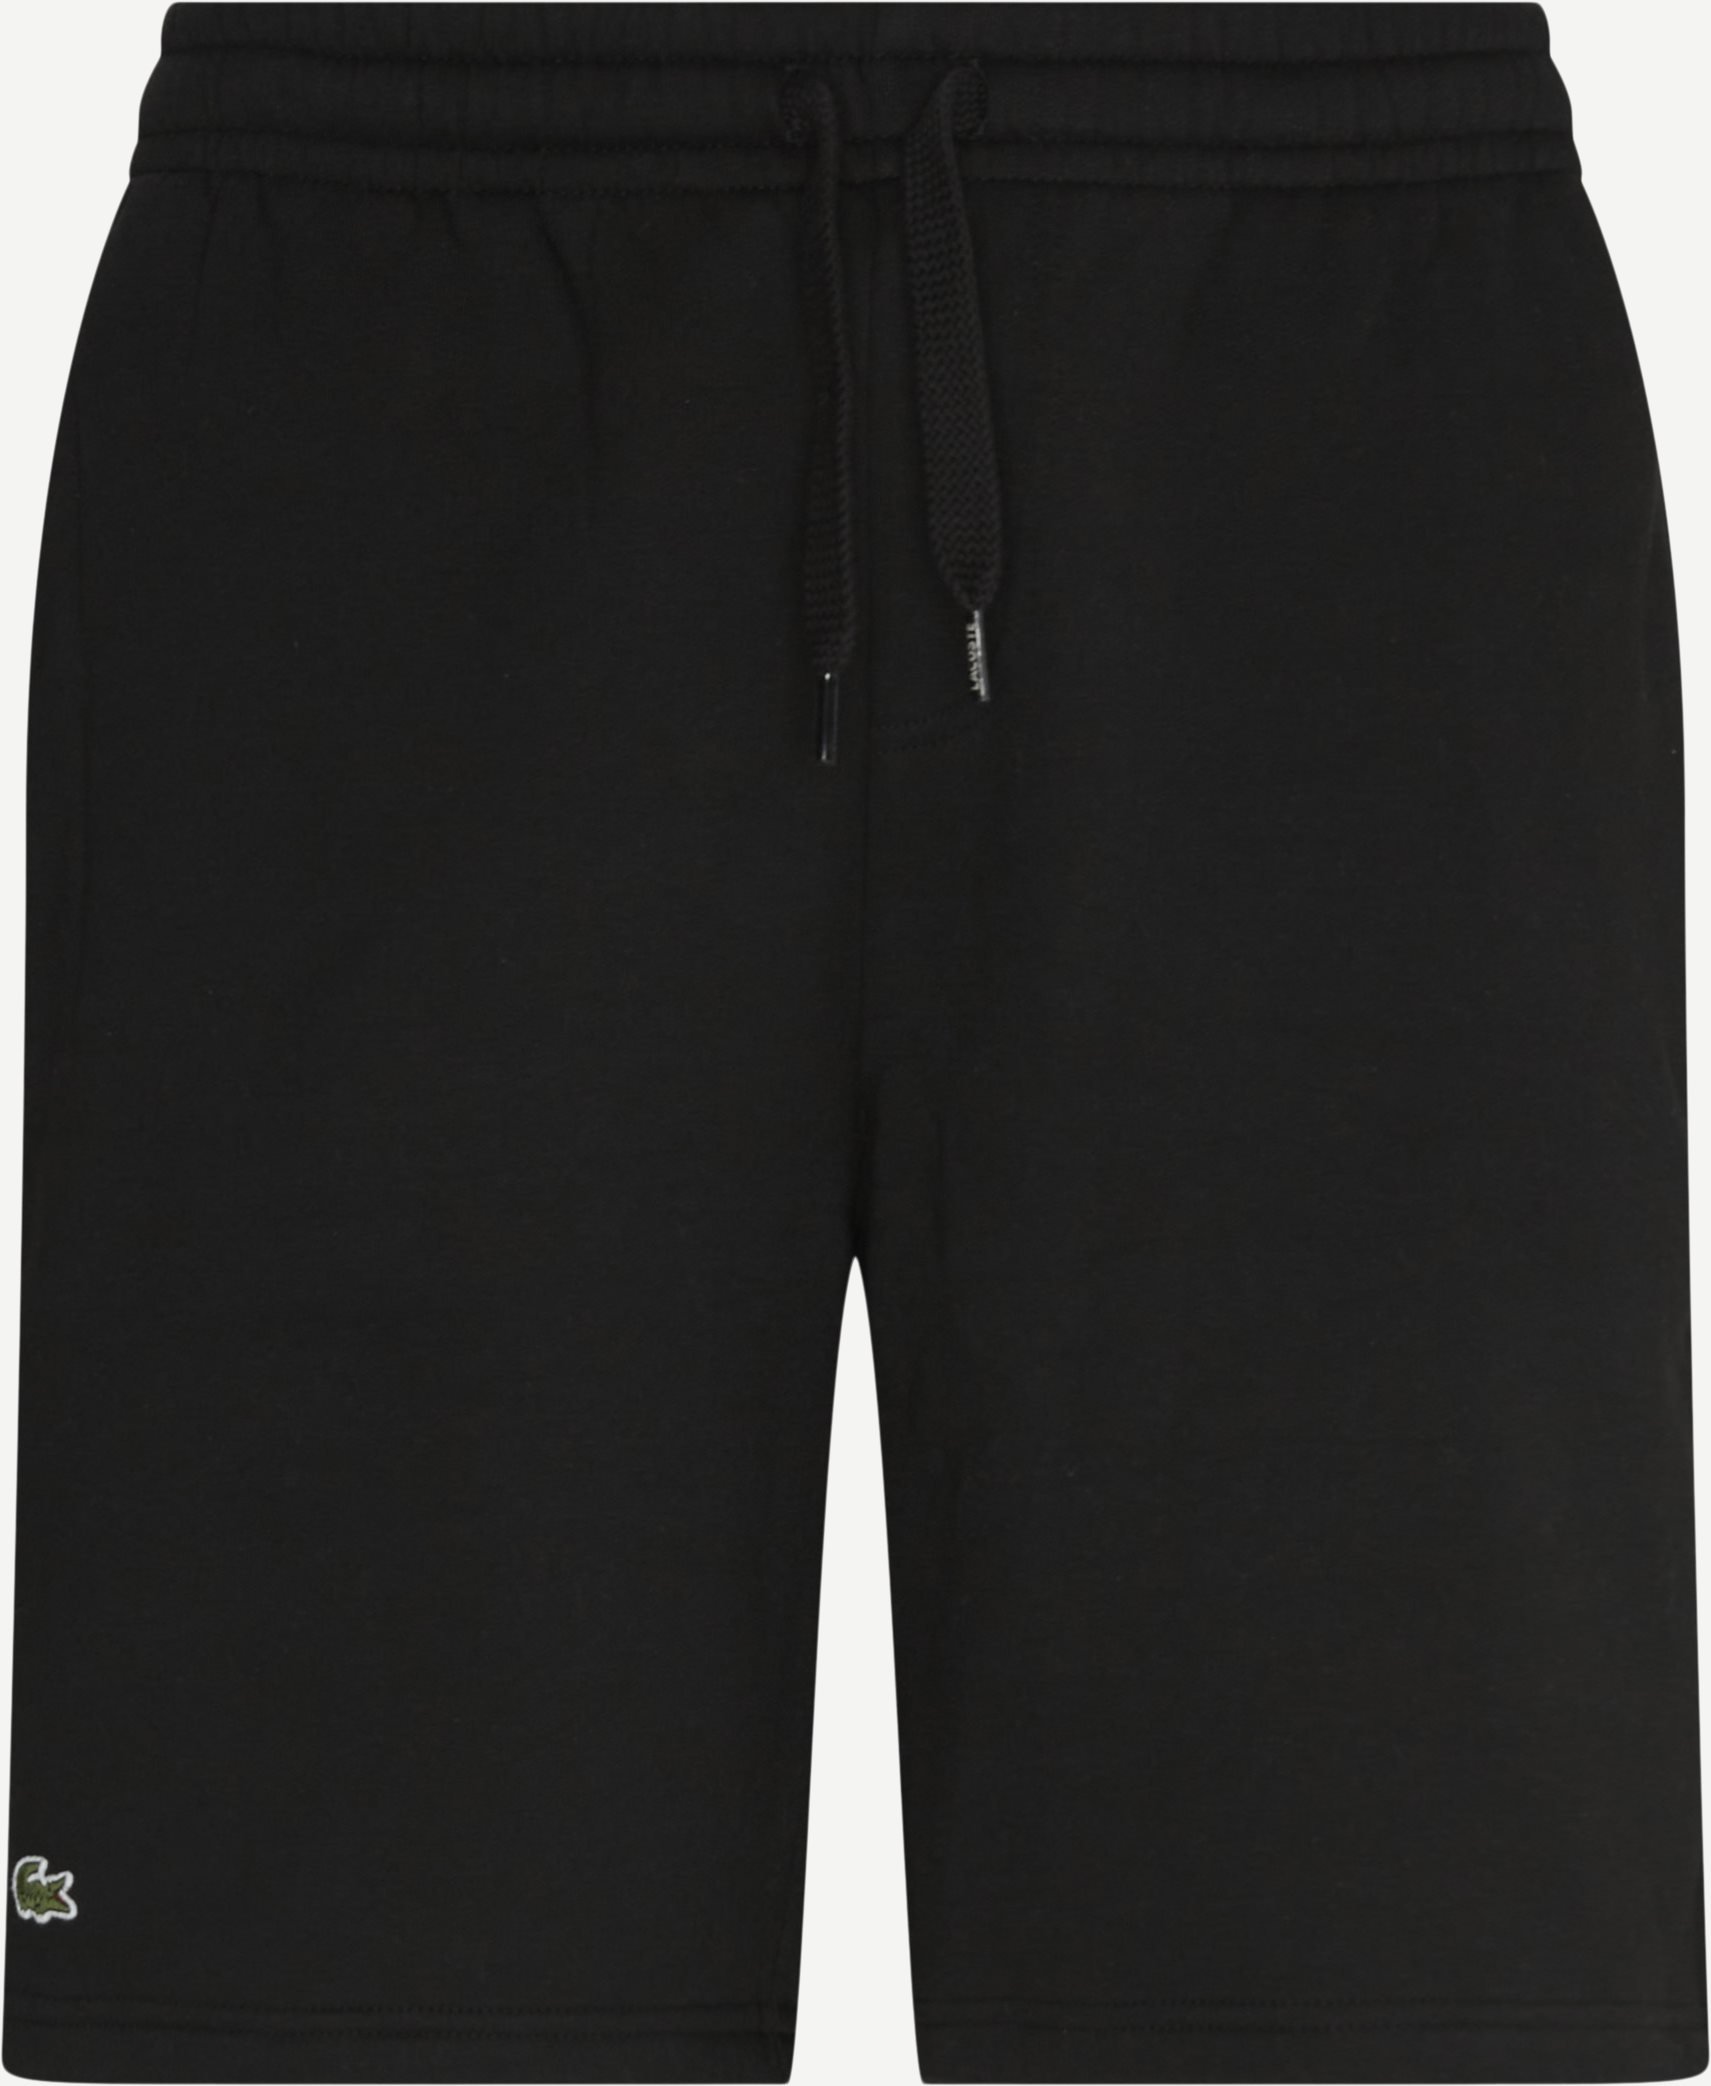 GH2136 Shorts - Shorts - Regular fit - Black